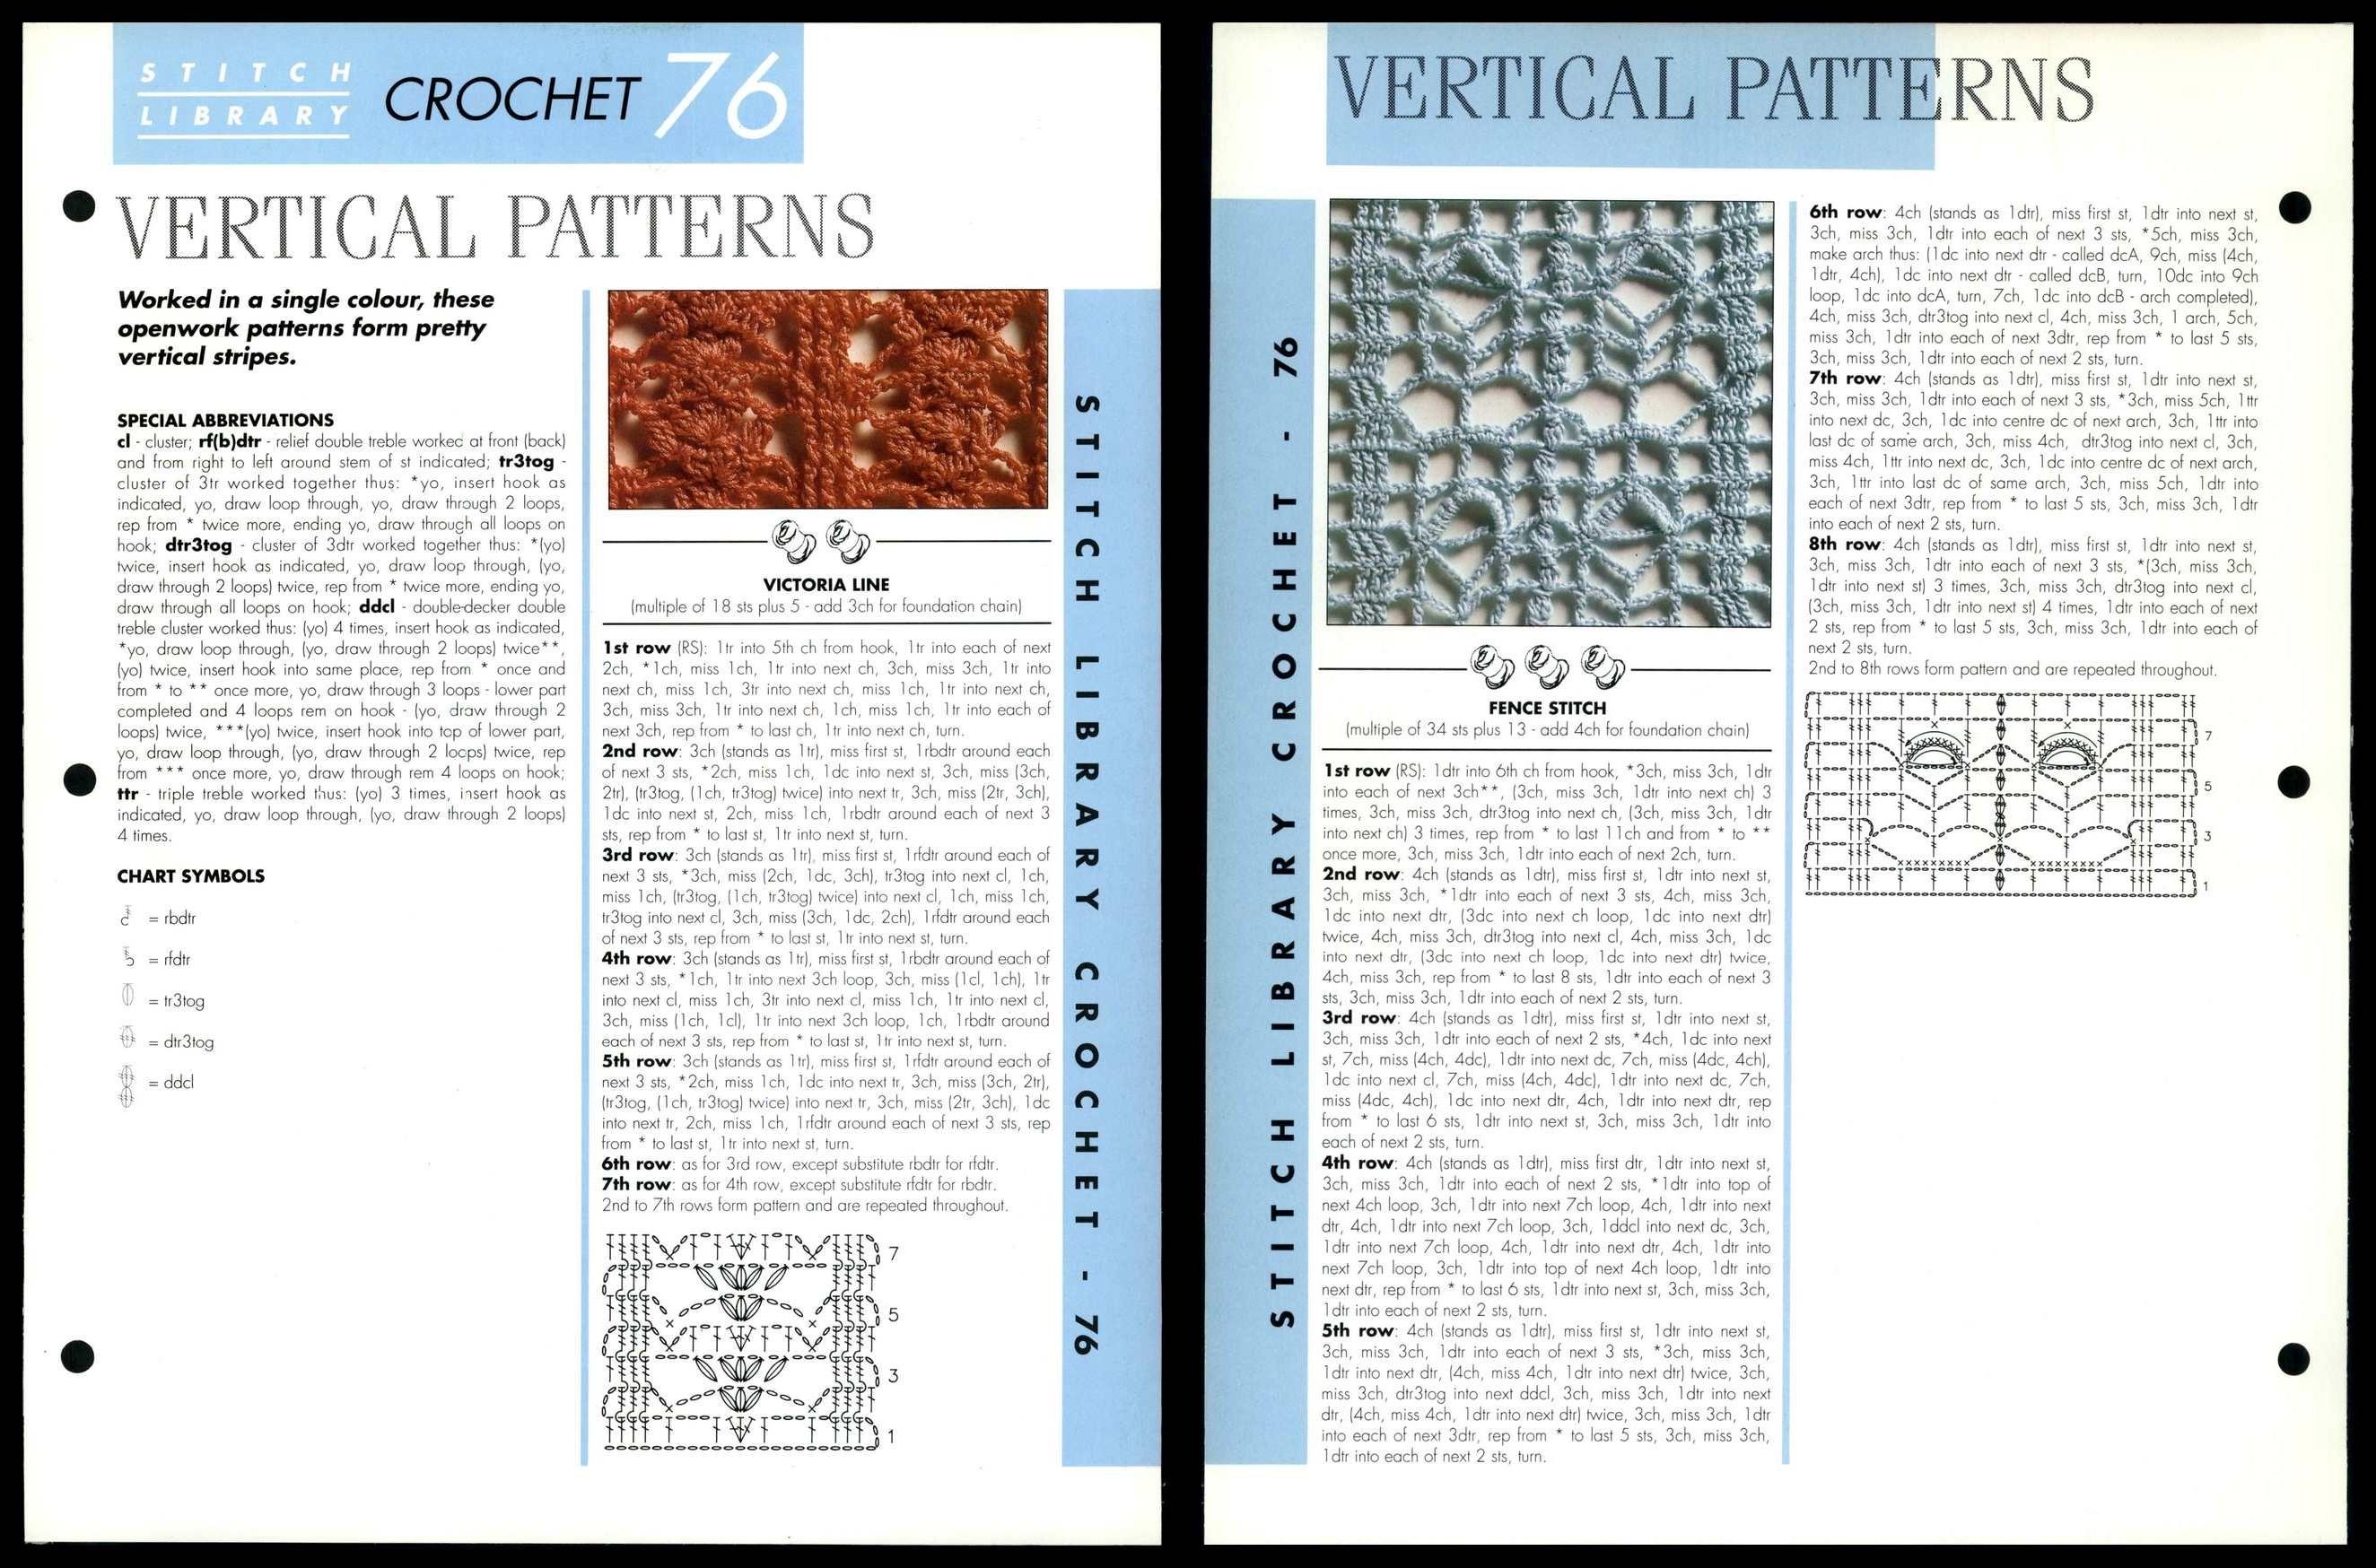 Vertical Patterns #76 Creative Needles Stitch Library Crochet Pattern